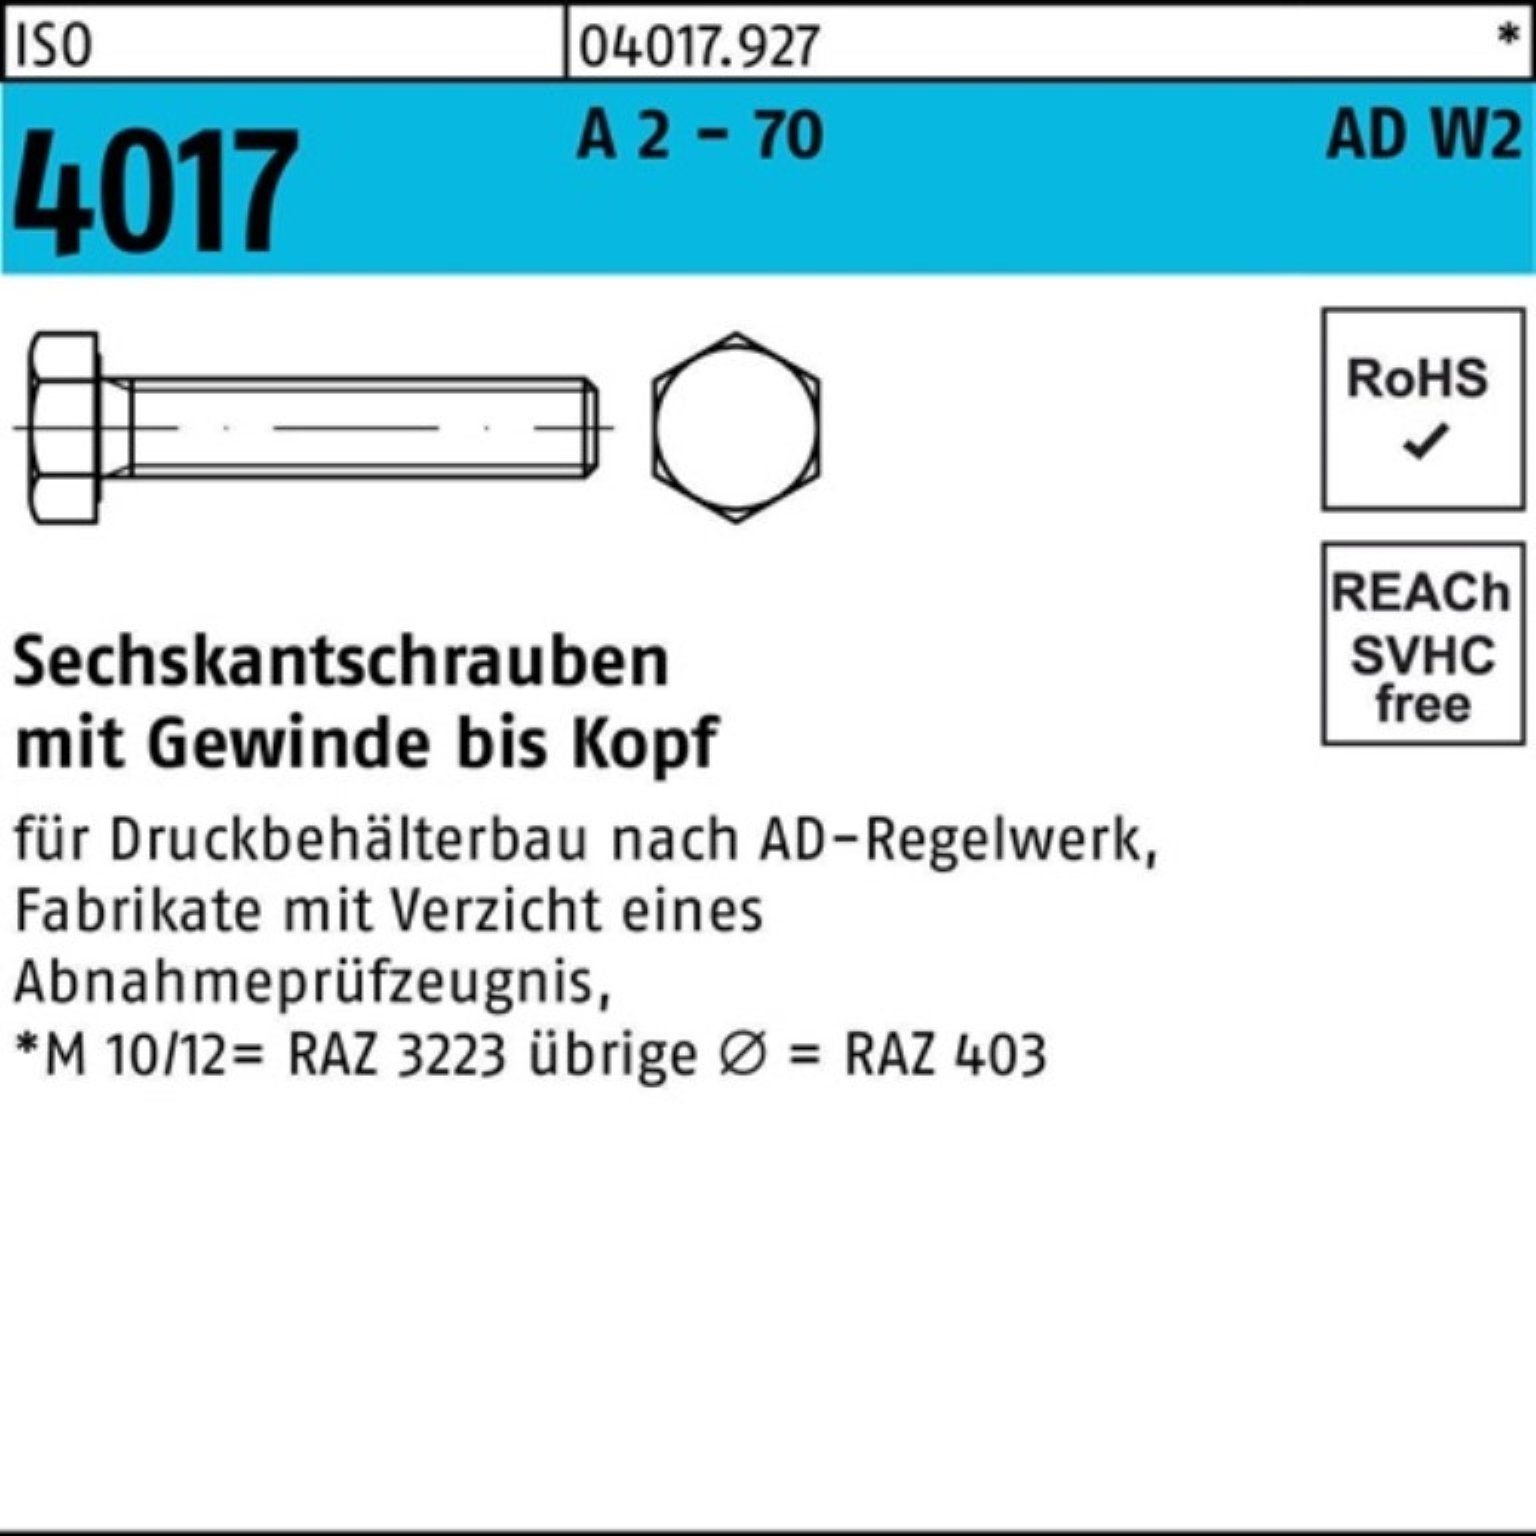 Bufab Sechskantschraube 100er Pack Sechskantschraube ISO 4017 VG M12x 30 A 2 - 70 AD-W2 50 St